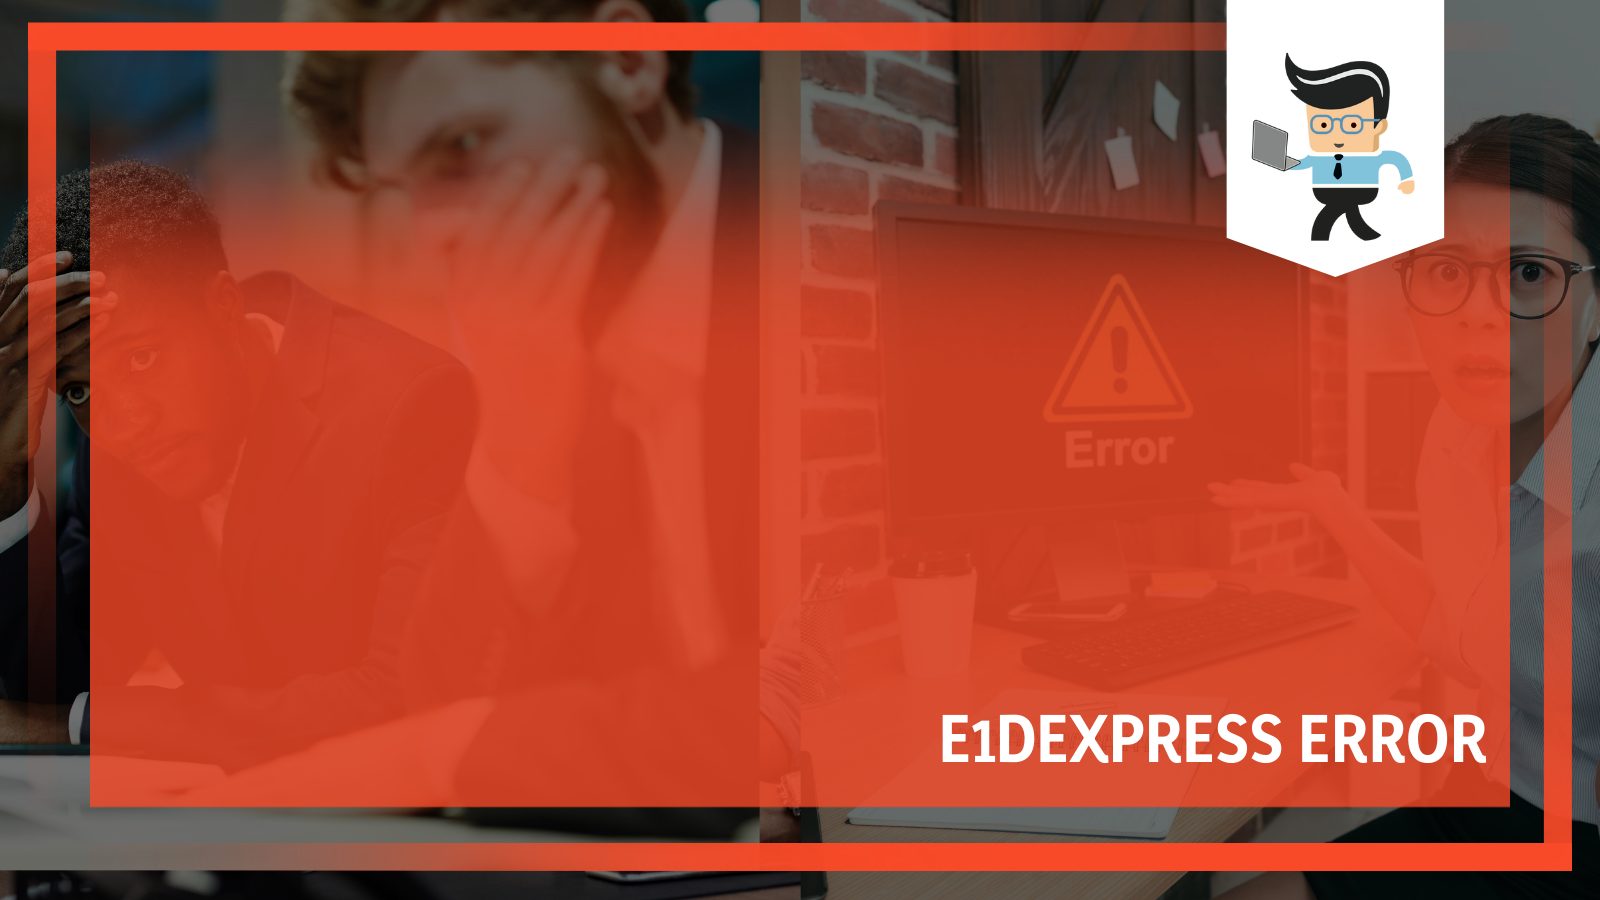 What is e dexpress error